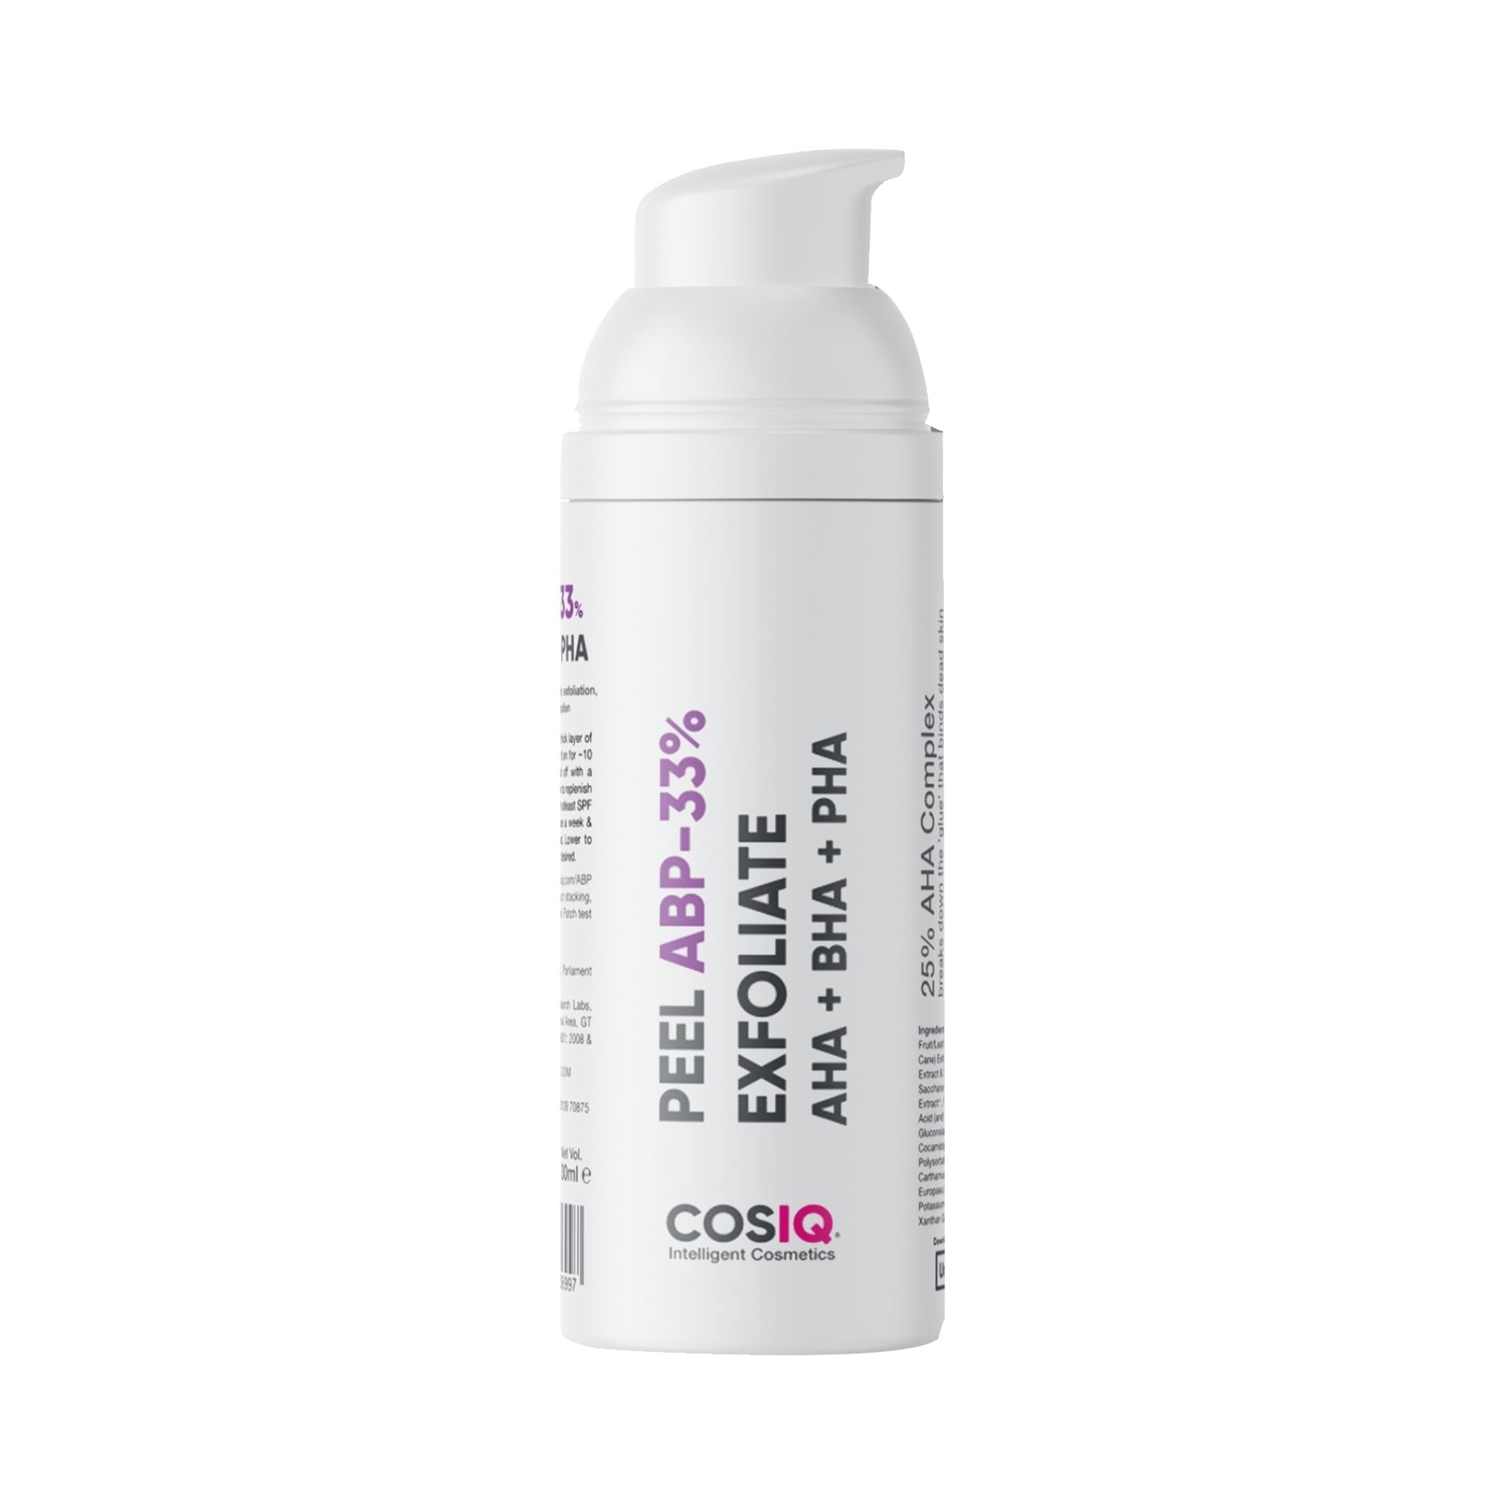 CosIQ | CosIQ ABP-33% Strong Exfoliating Peeling Solution (30ml)